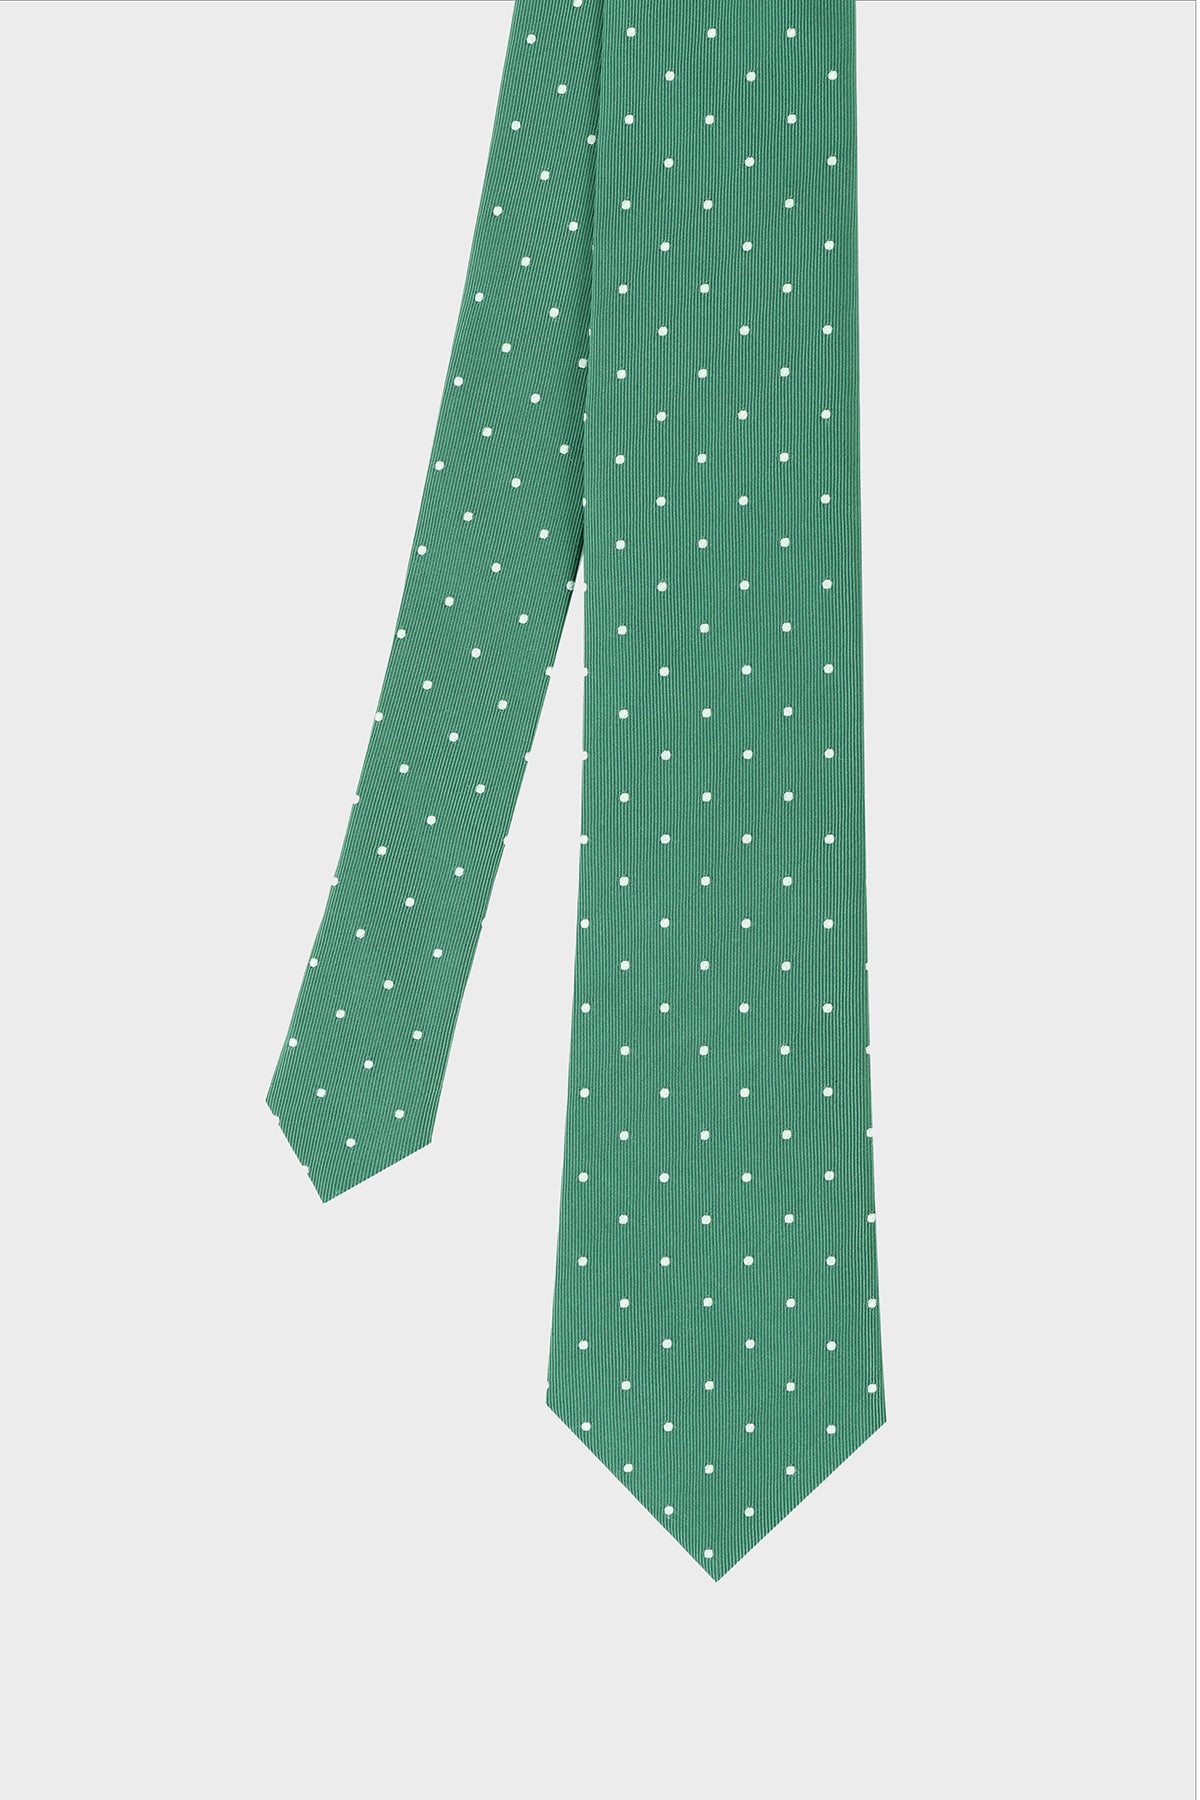 Cravate Vert à Pois